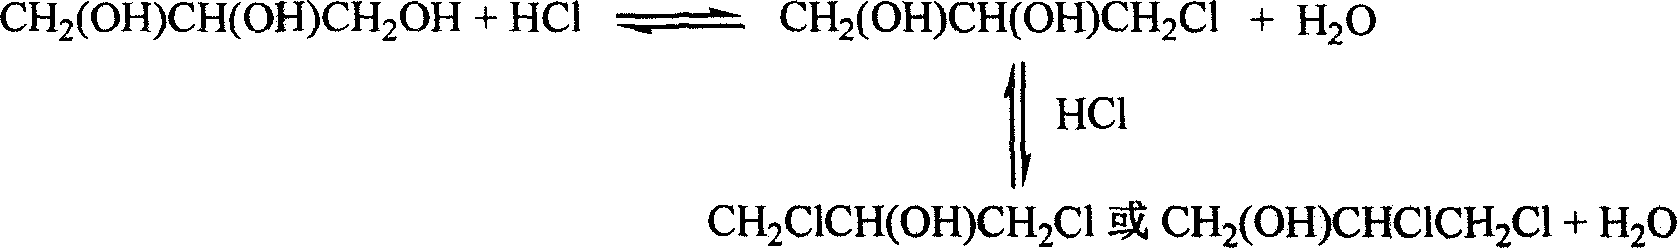 Preparation method of dichloro propanol from glycerin